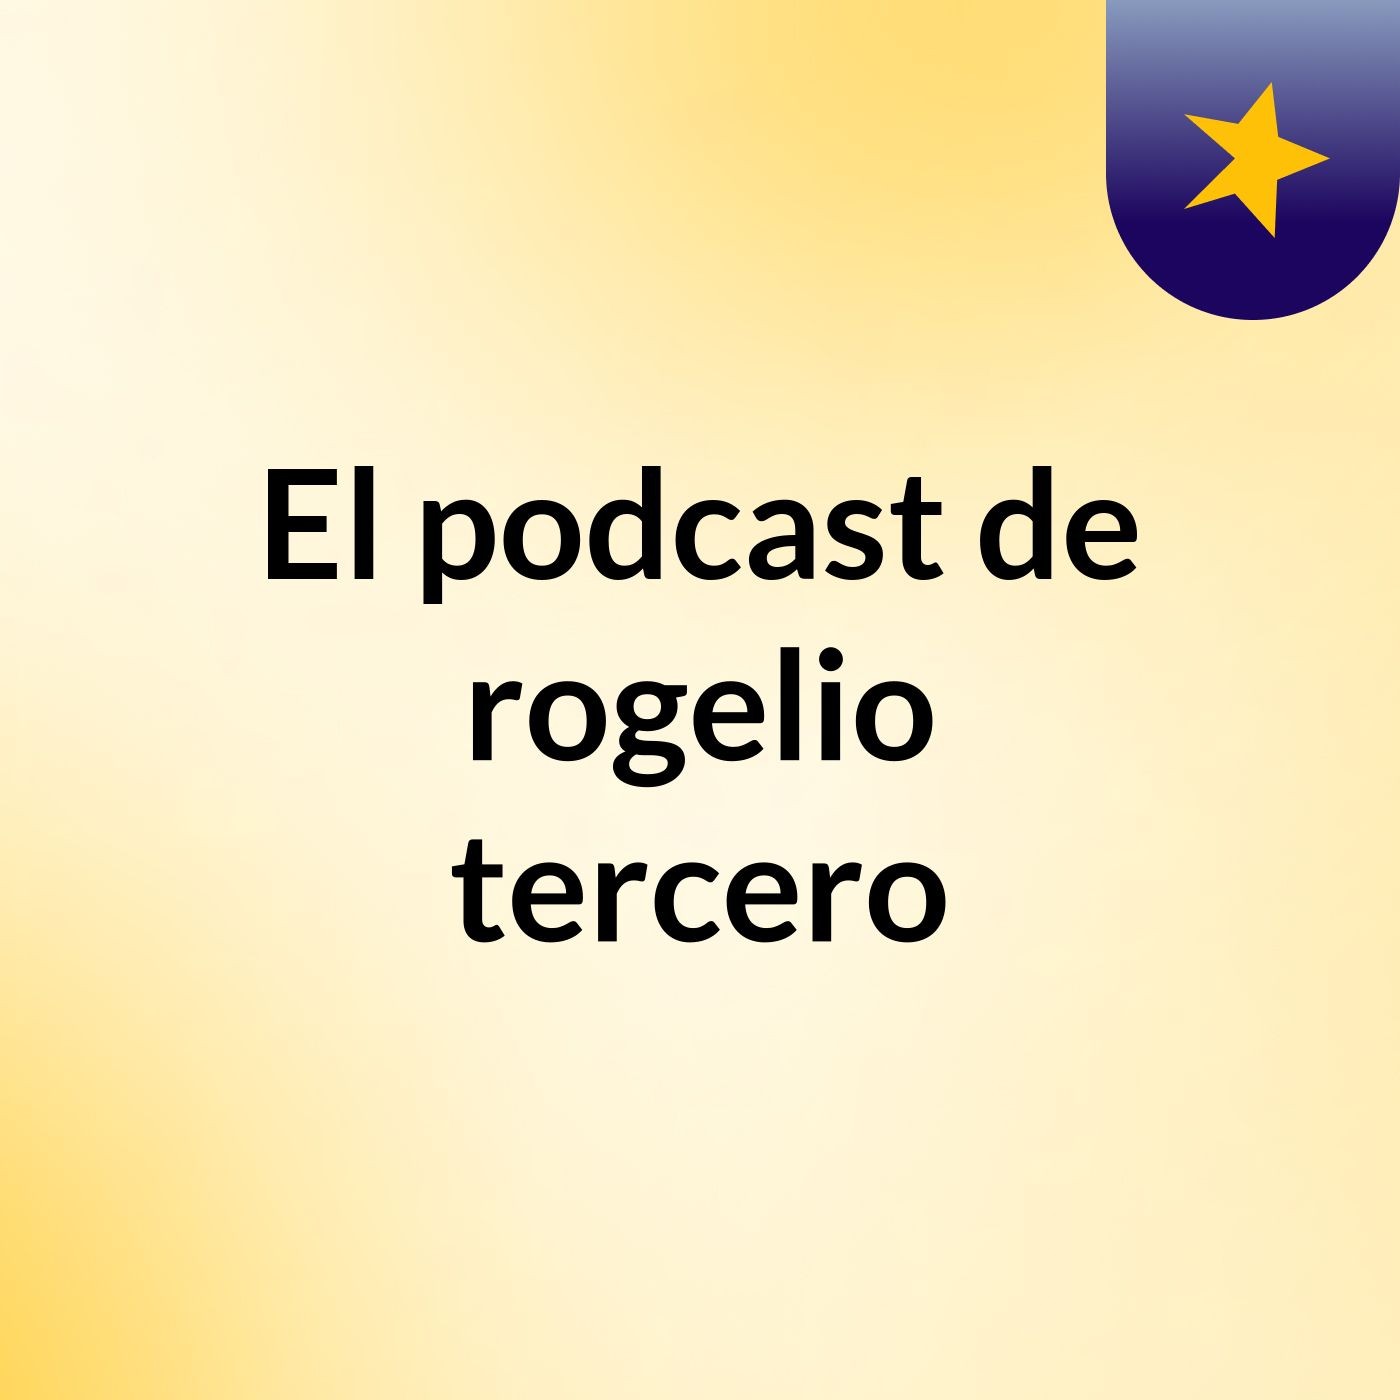 El podcast de rogelio tercero